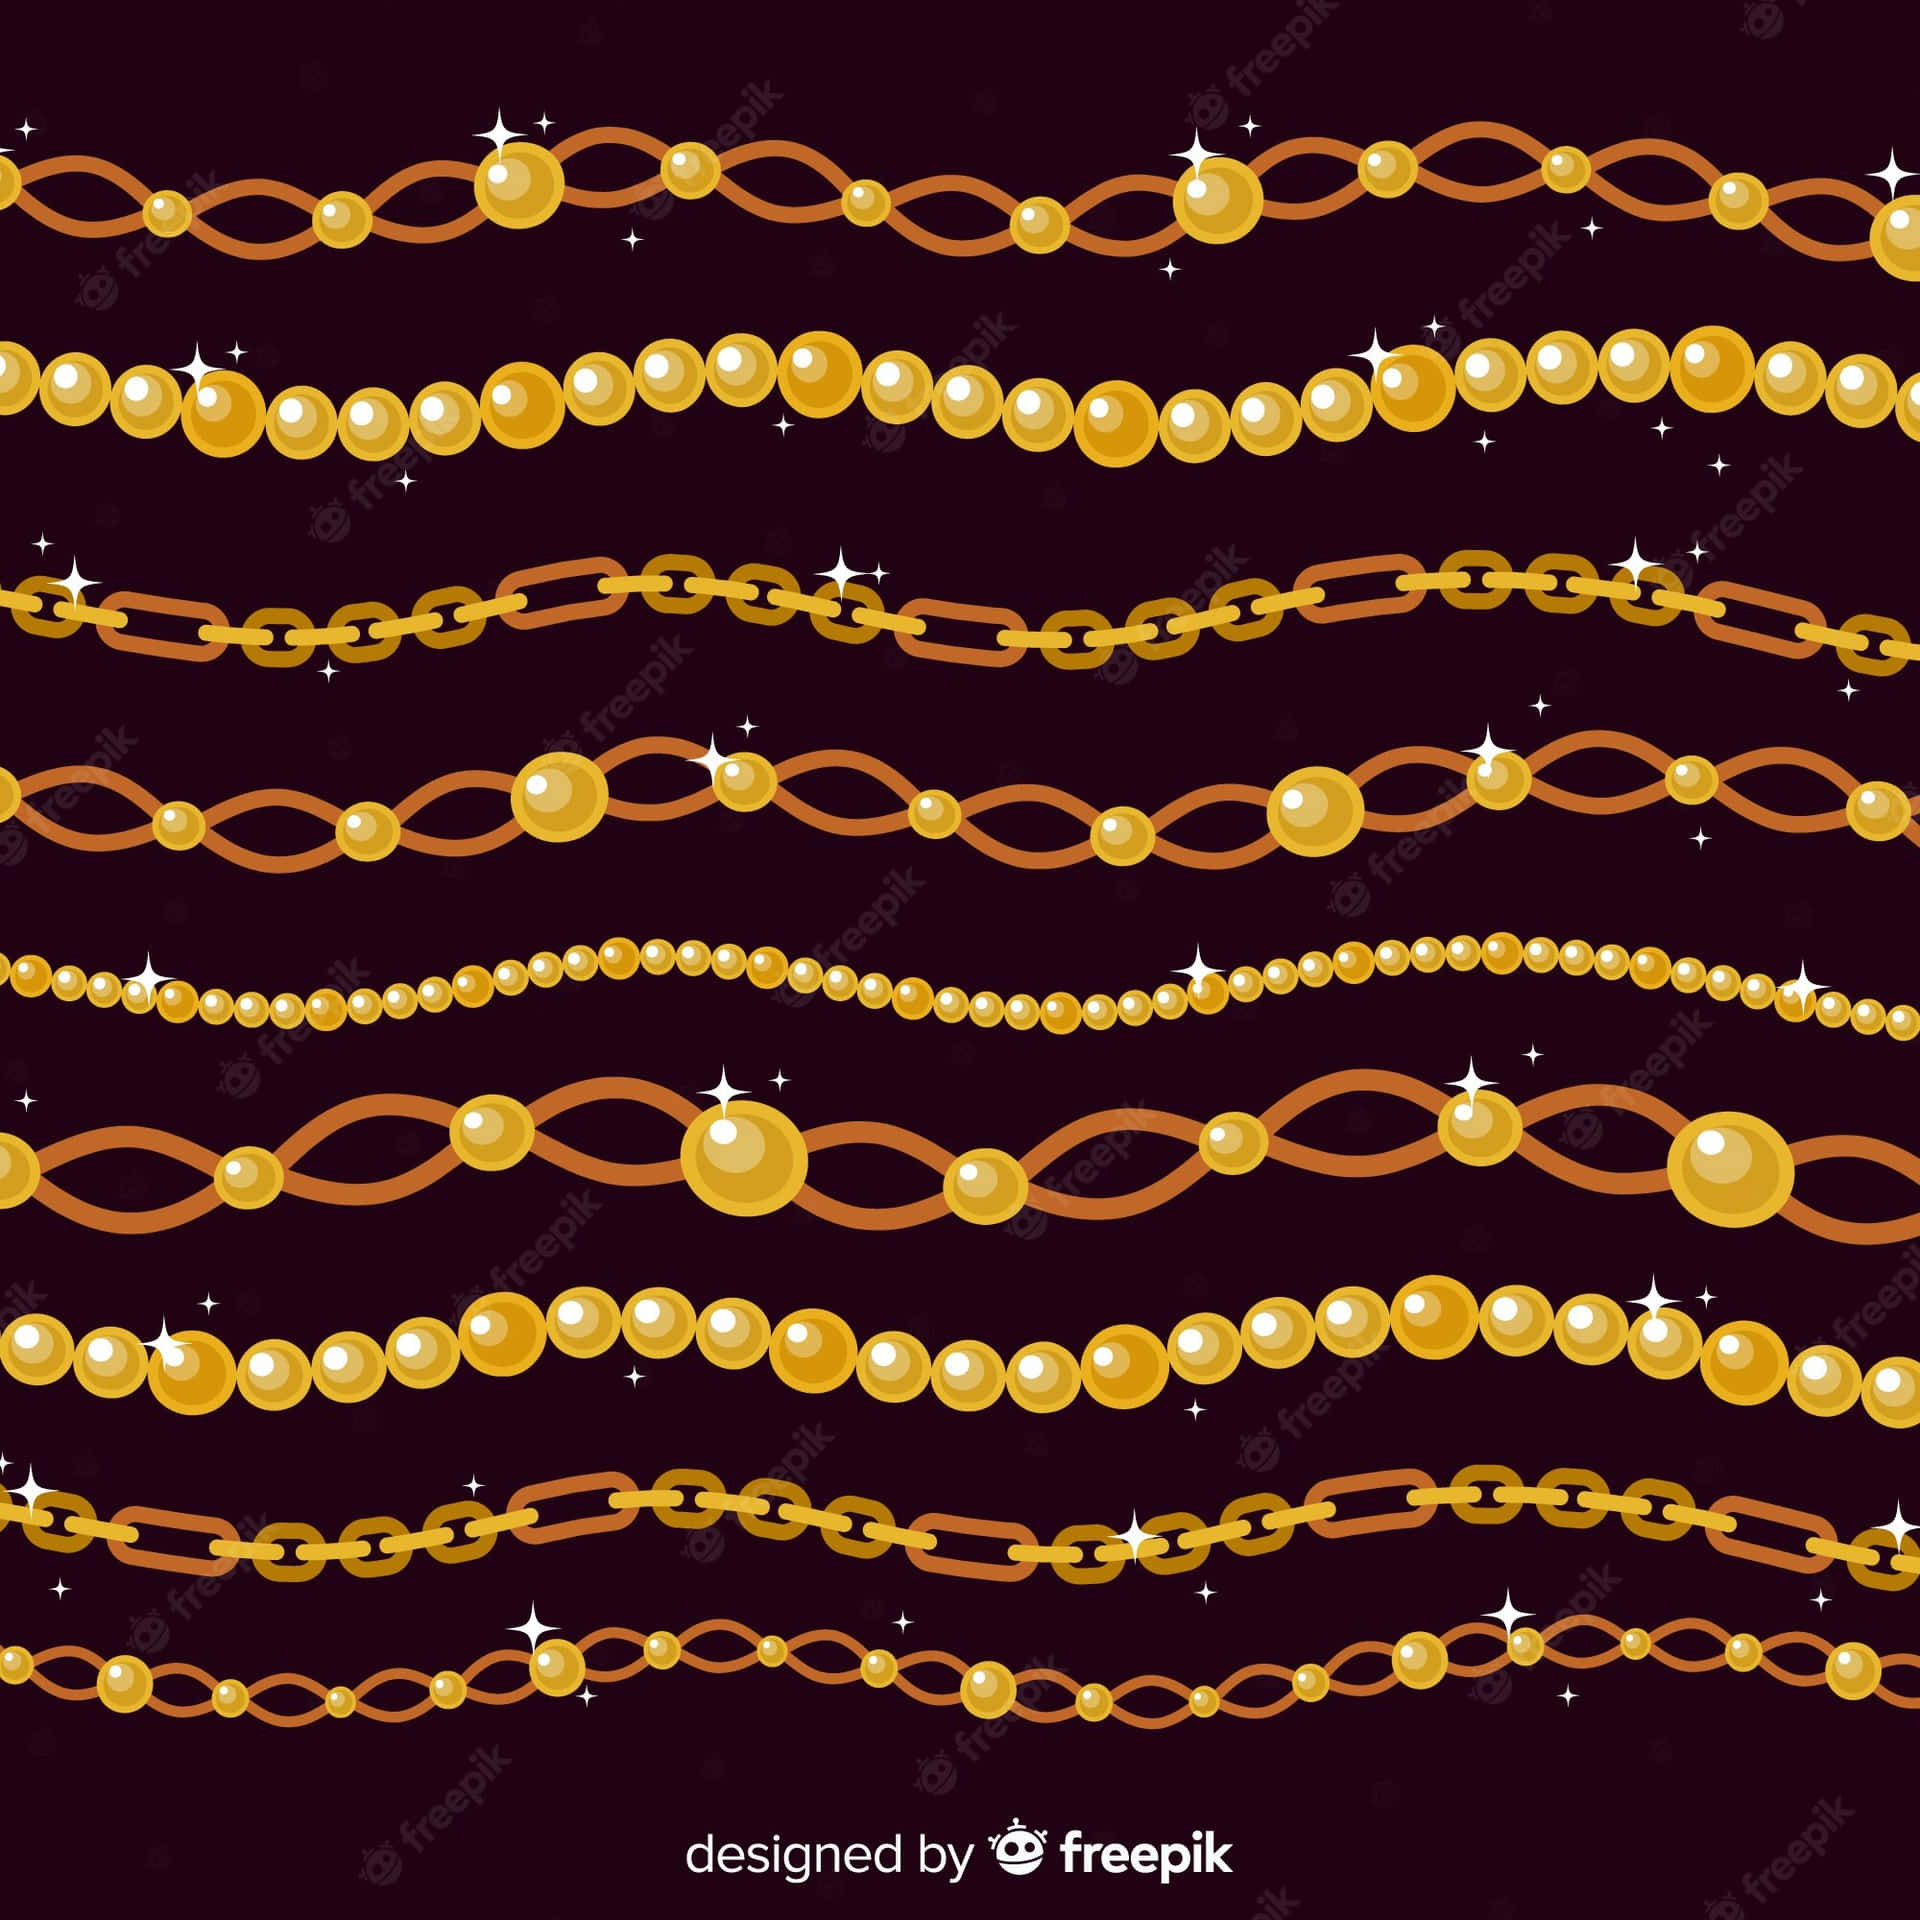 Stylish Gold Chain For Adornment Wallpaper